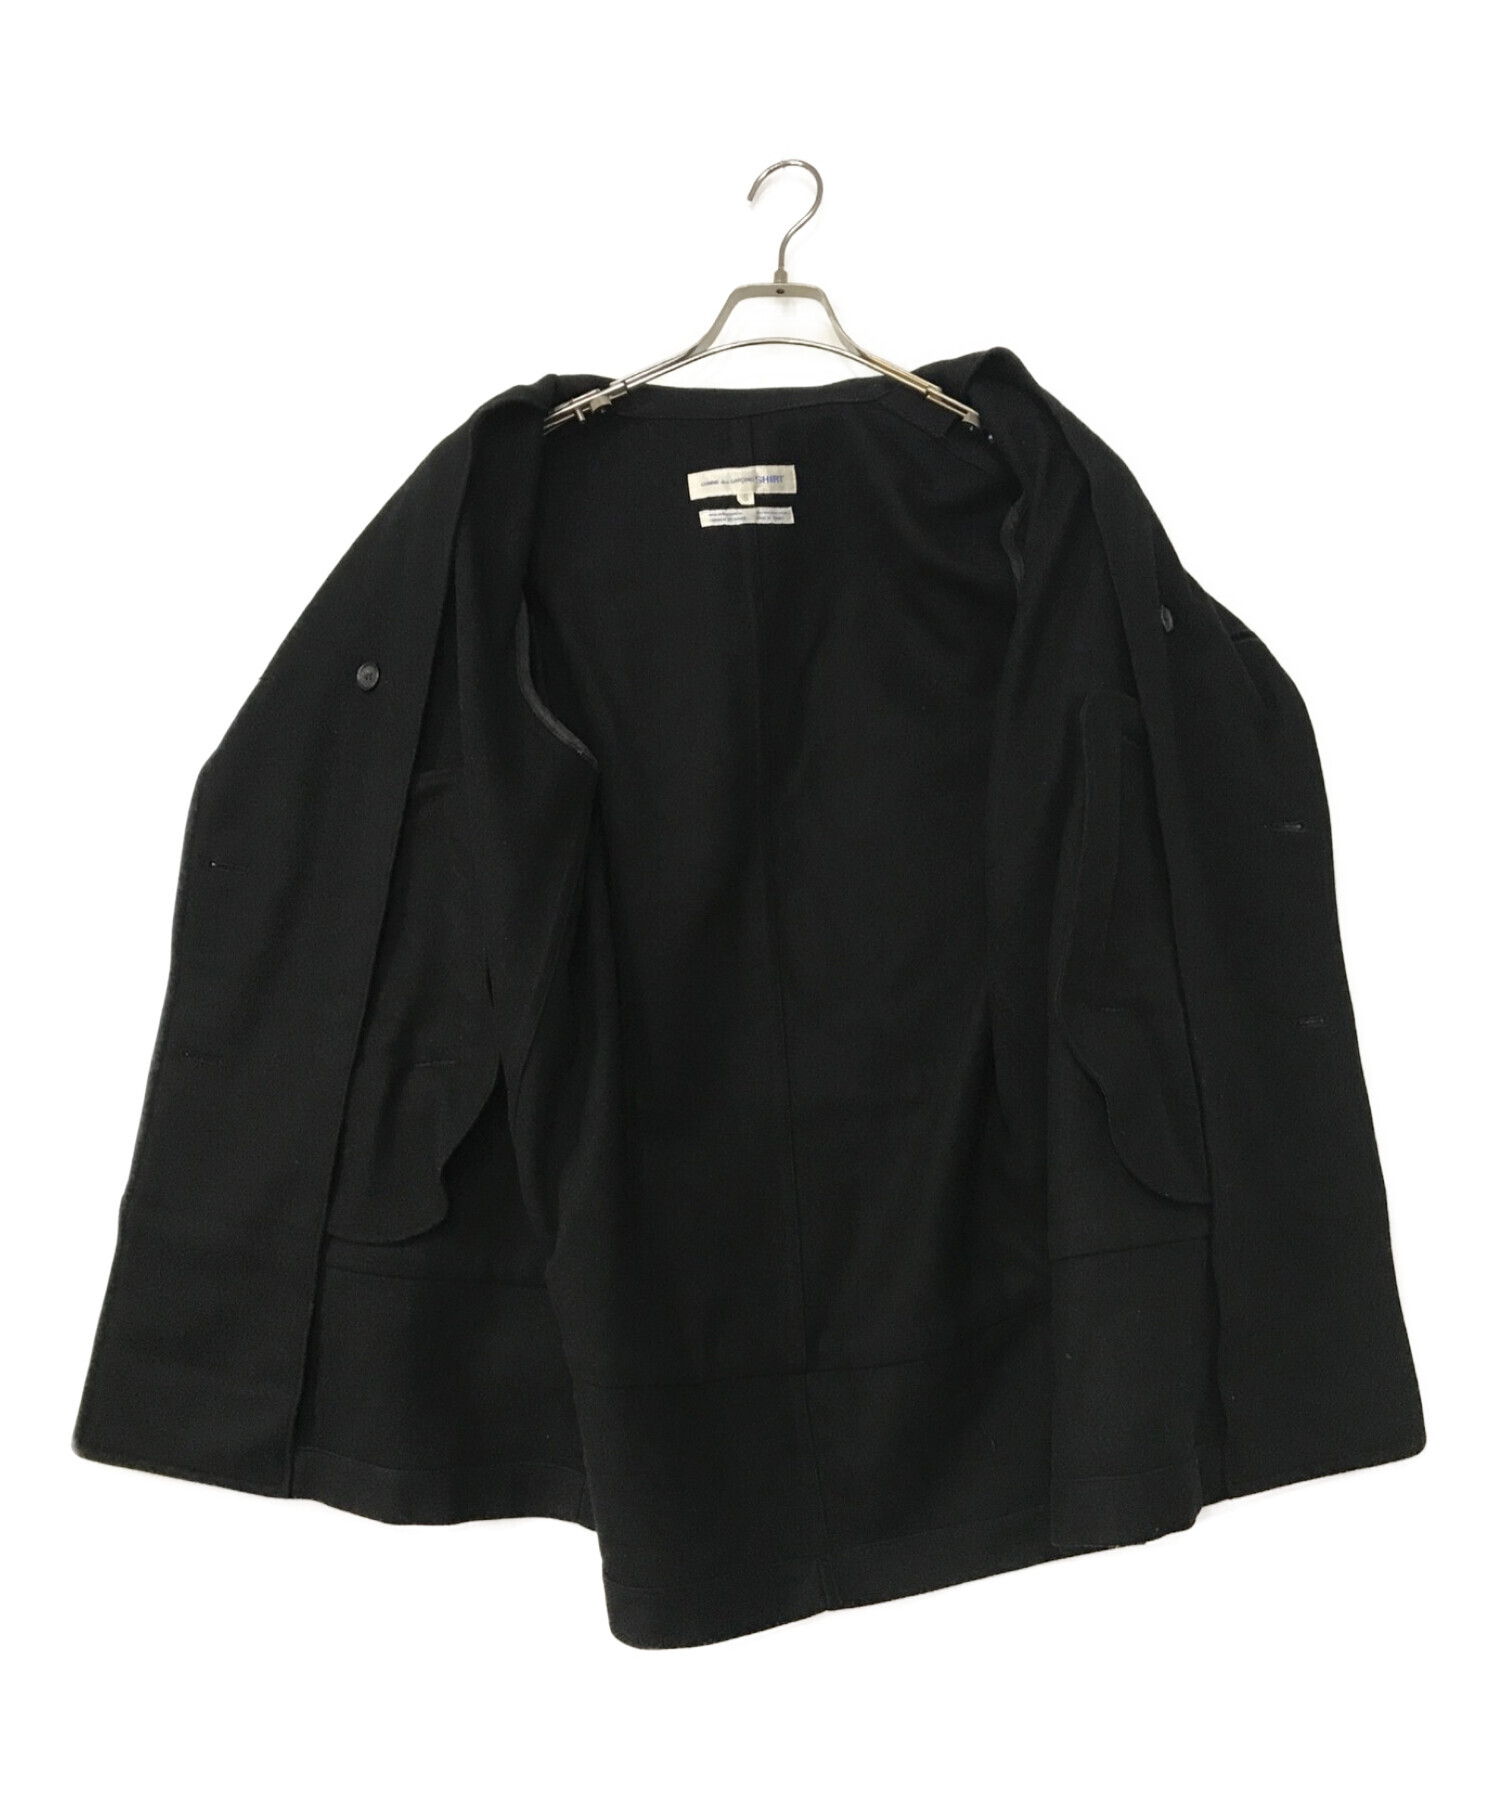 COMME des GARCONS SHIRT (コムデギャルソンシャツ) Pコート ブラック サイズ:S